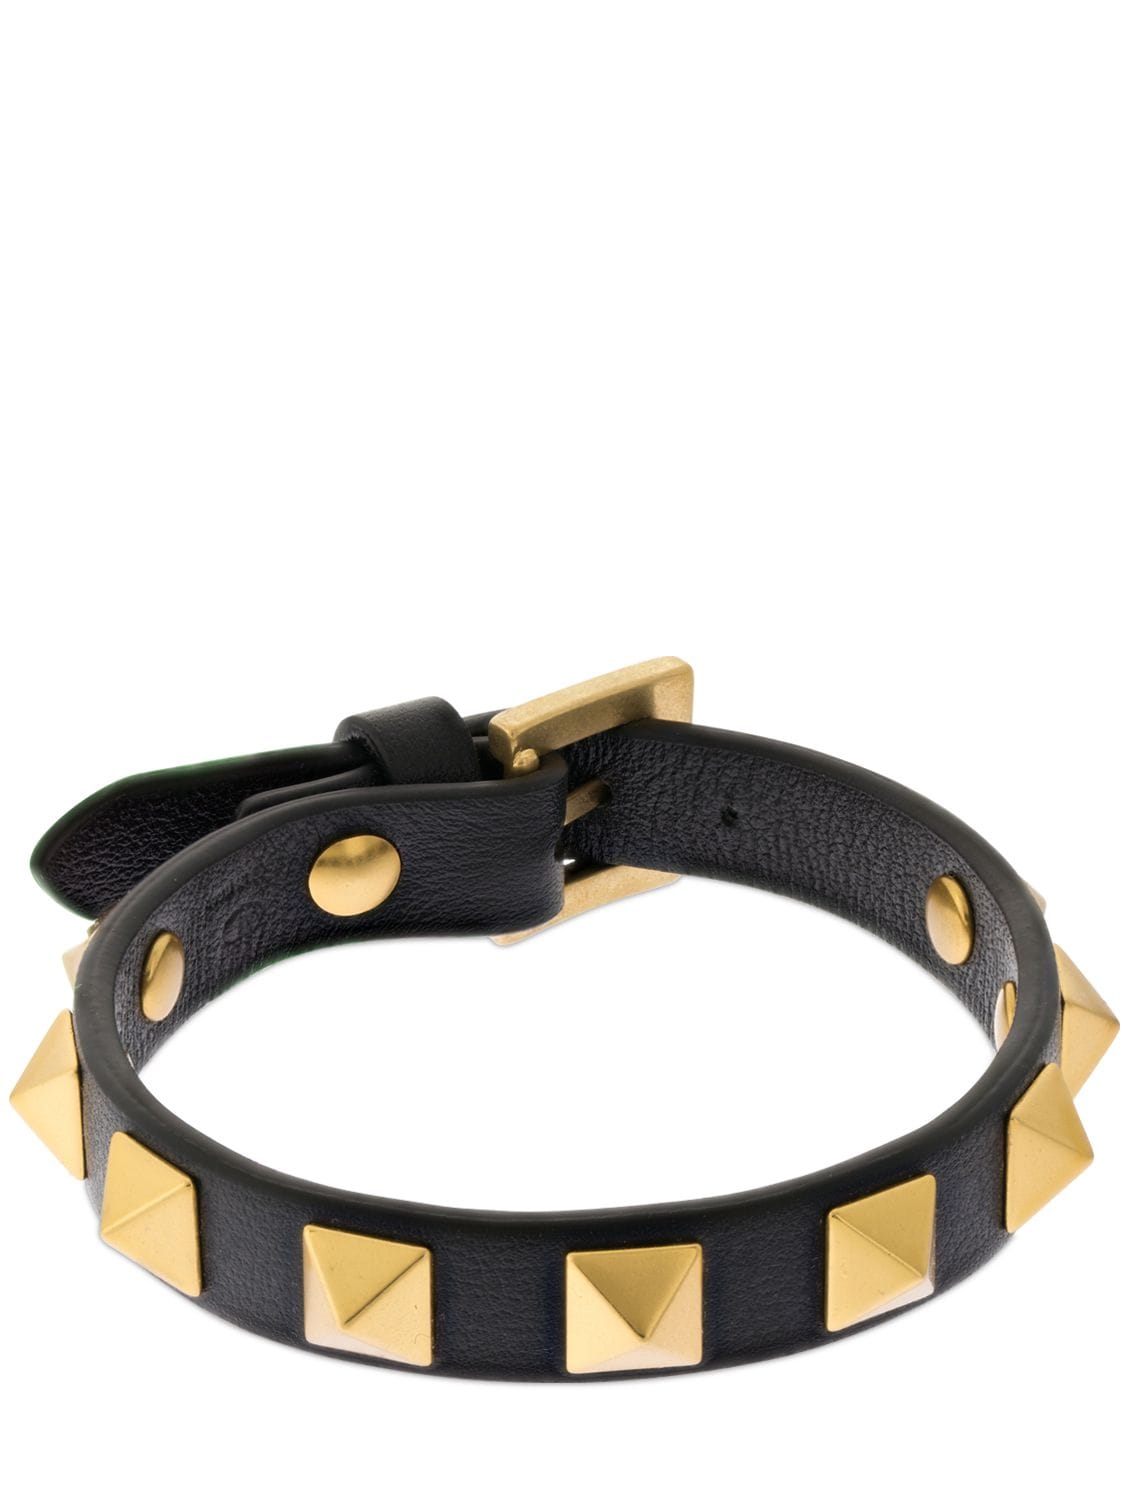 Valentino Garavani Rockstud Leather Belt Bracelet In 黑色,金色